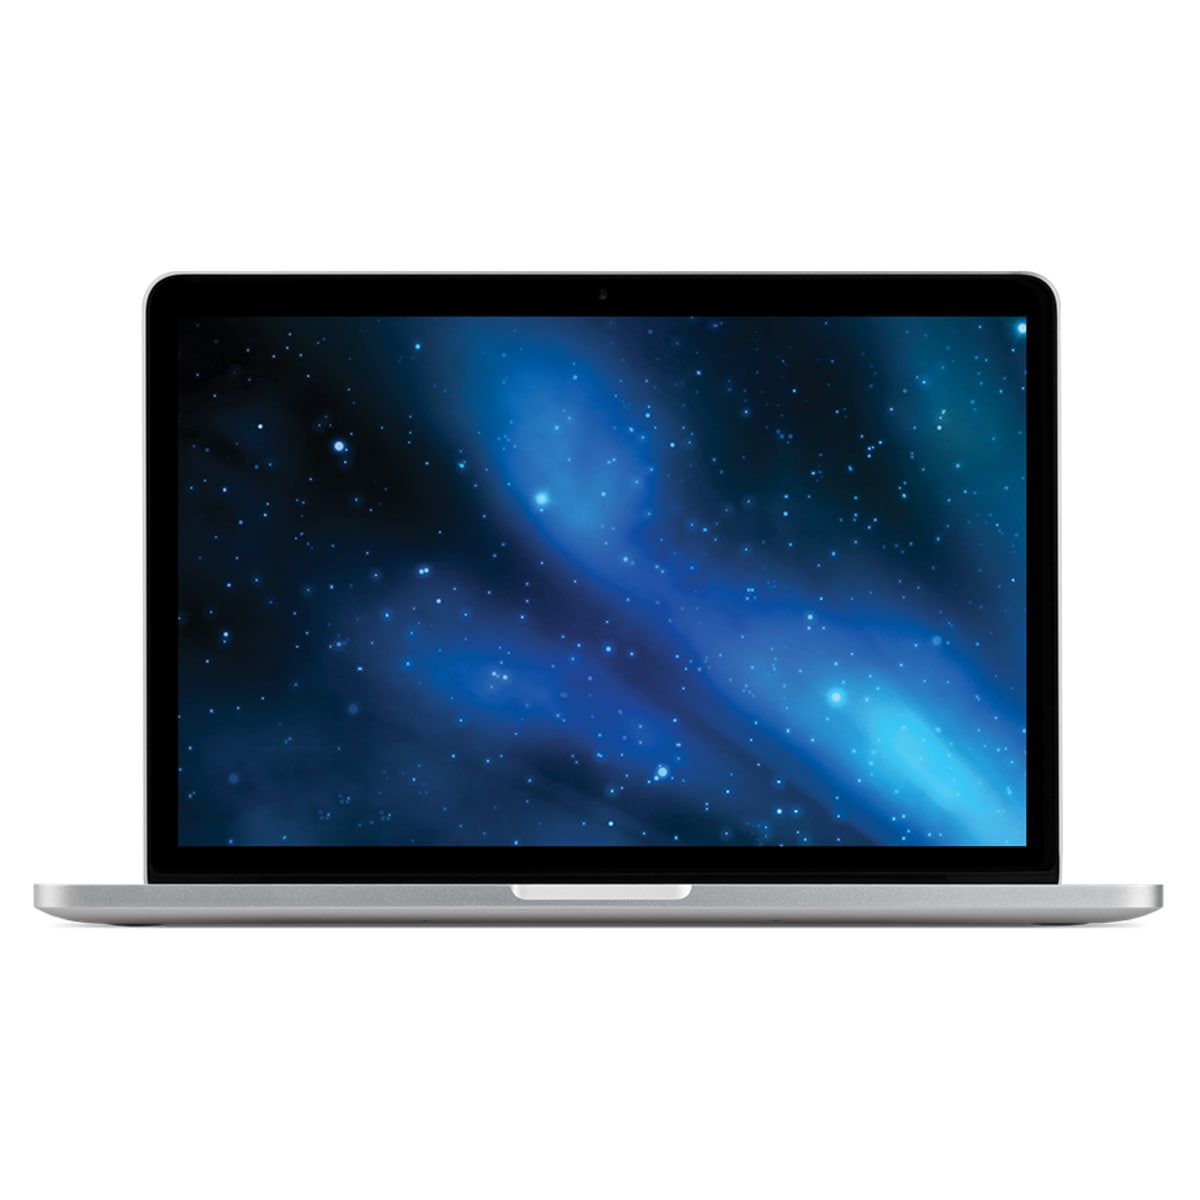 Motivere måske Fysik MacBook Pro Battery Replacement Kits - 100% Apple Compatible